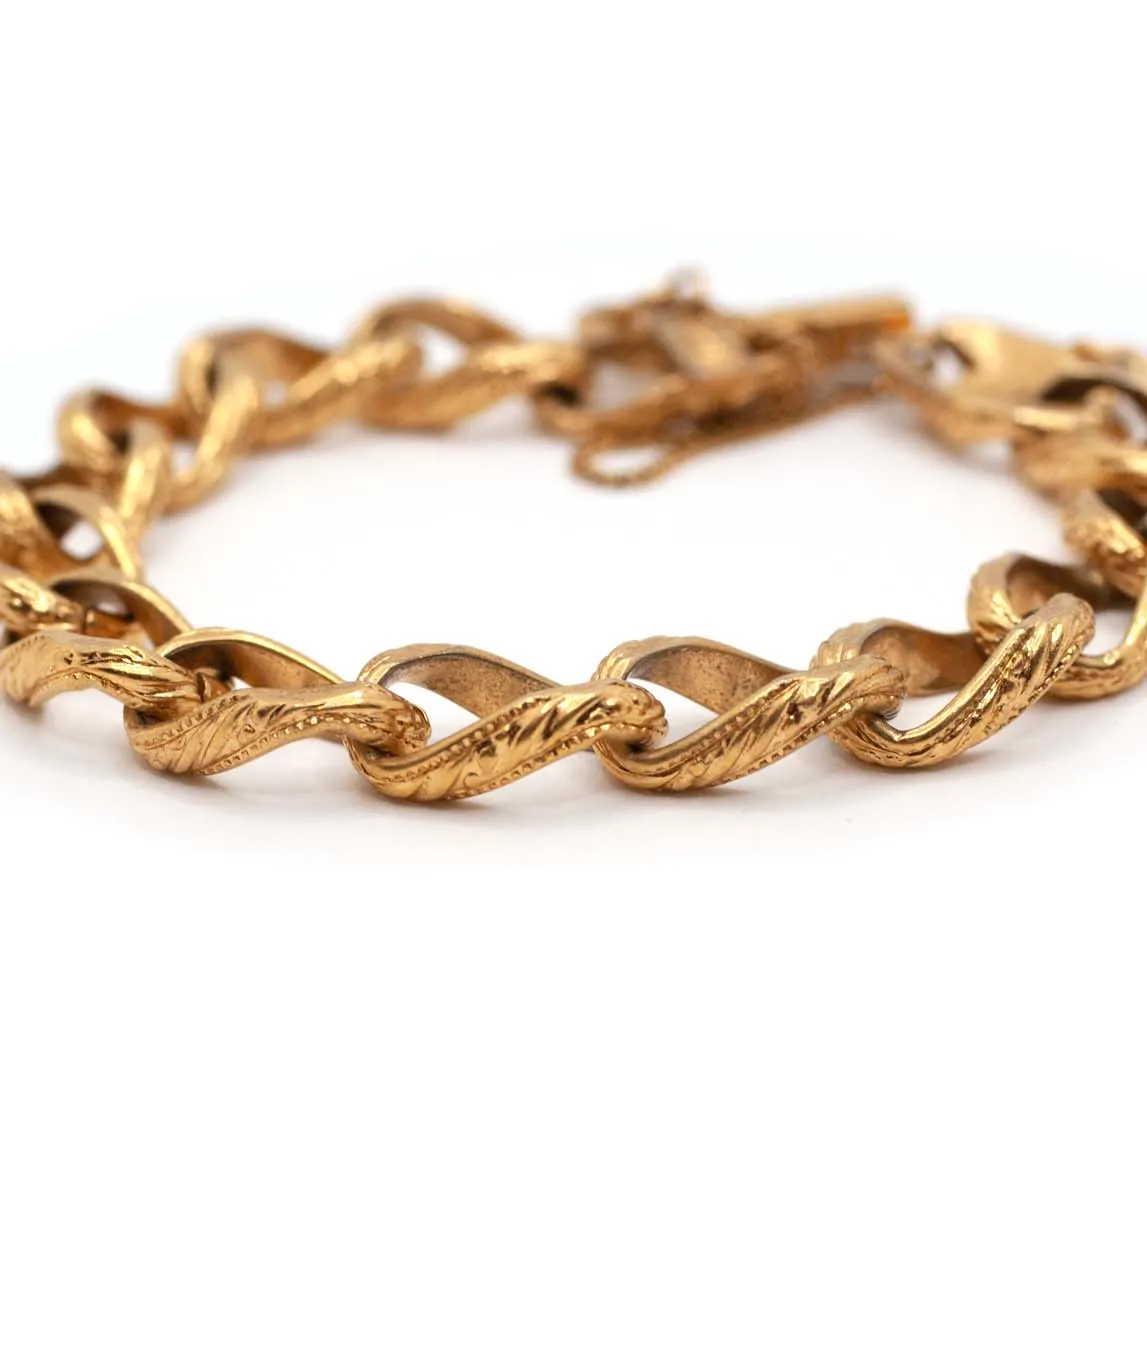 Close up of gold plated textured links of vintage Monet bracelet